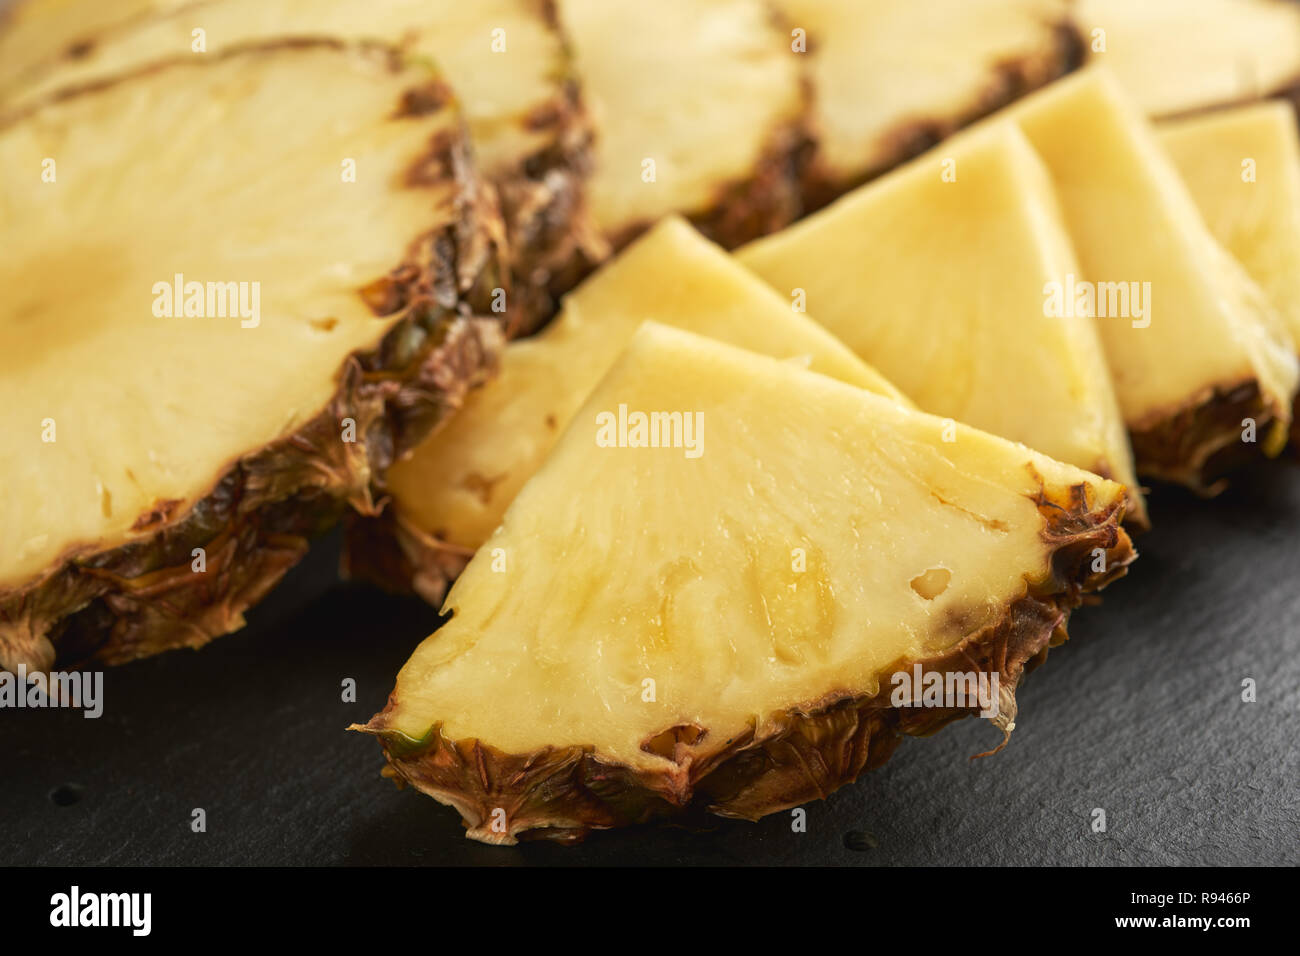 Sliced fresh pineapple on a slate surface Stock Photo